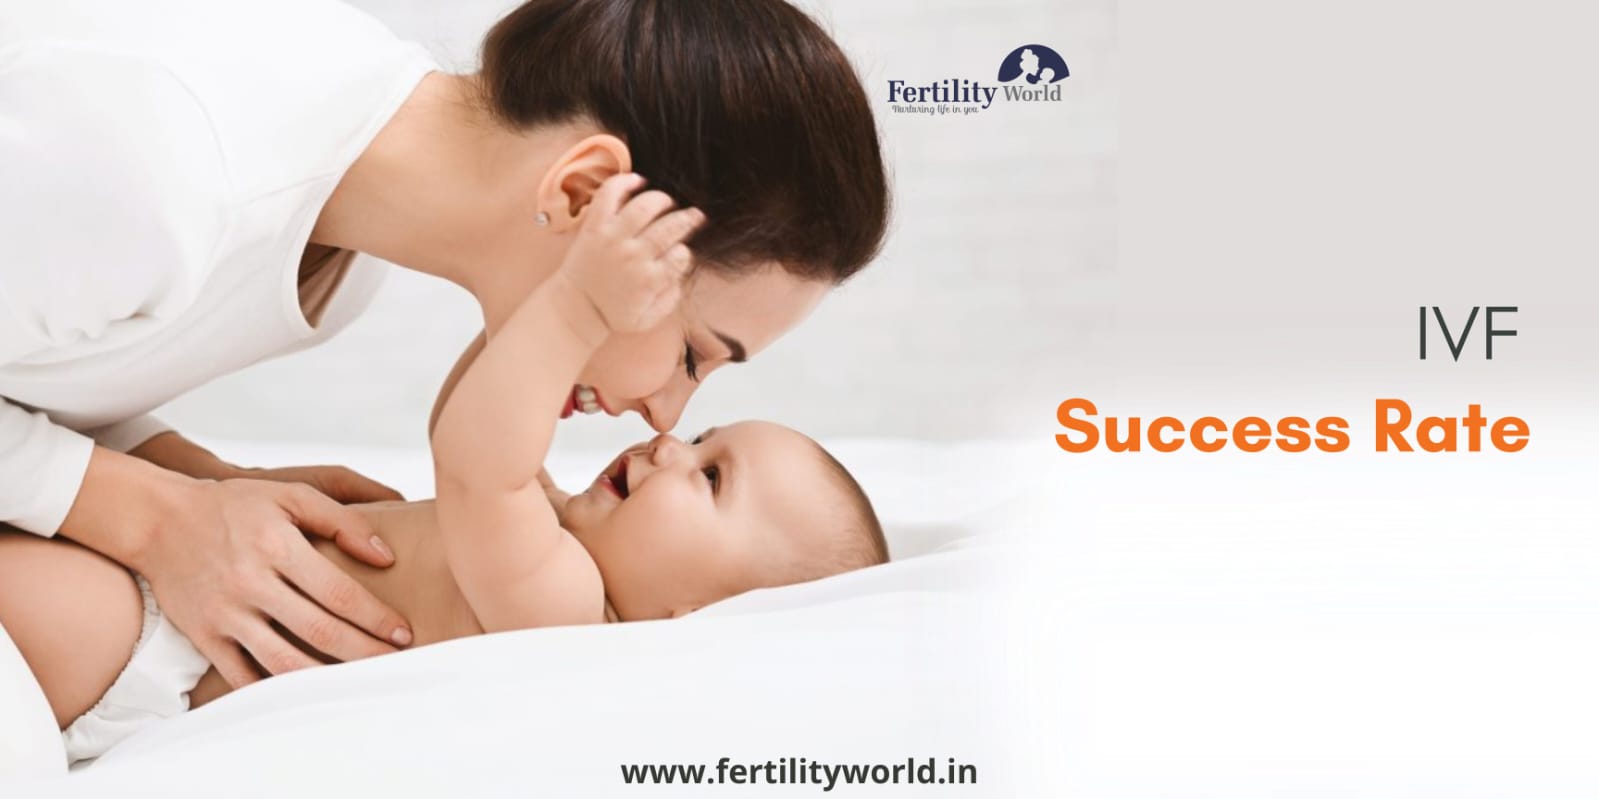 IVF success rate in Surat, Gujarat